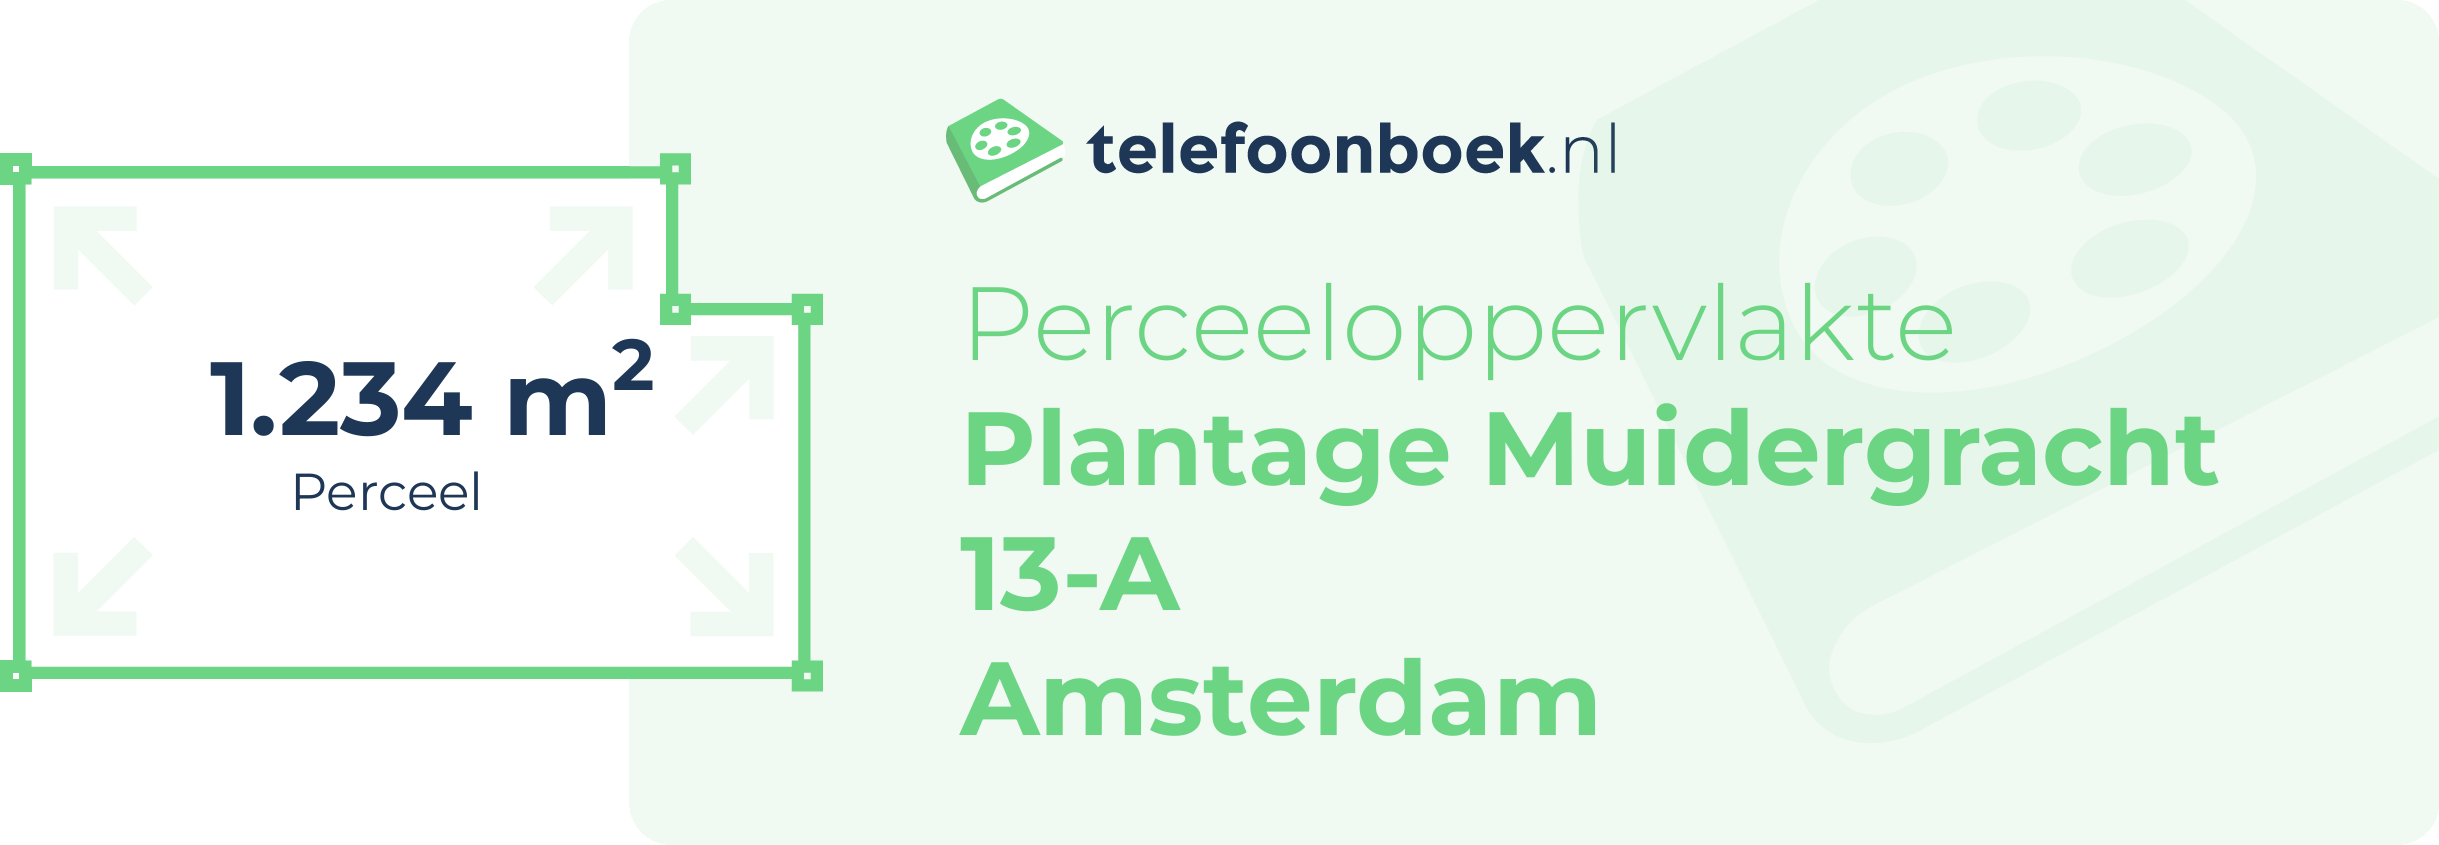 Perceeloppervlakte Plantage Muidergracht 13-A Amsterdam